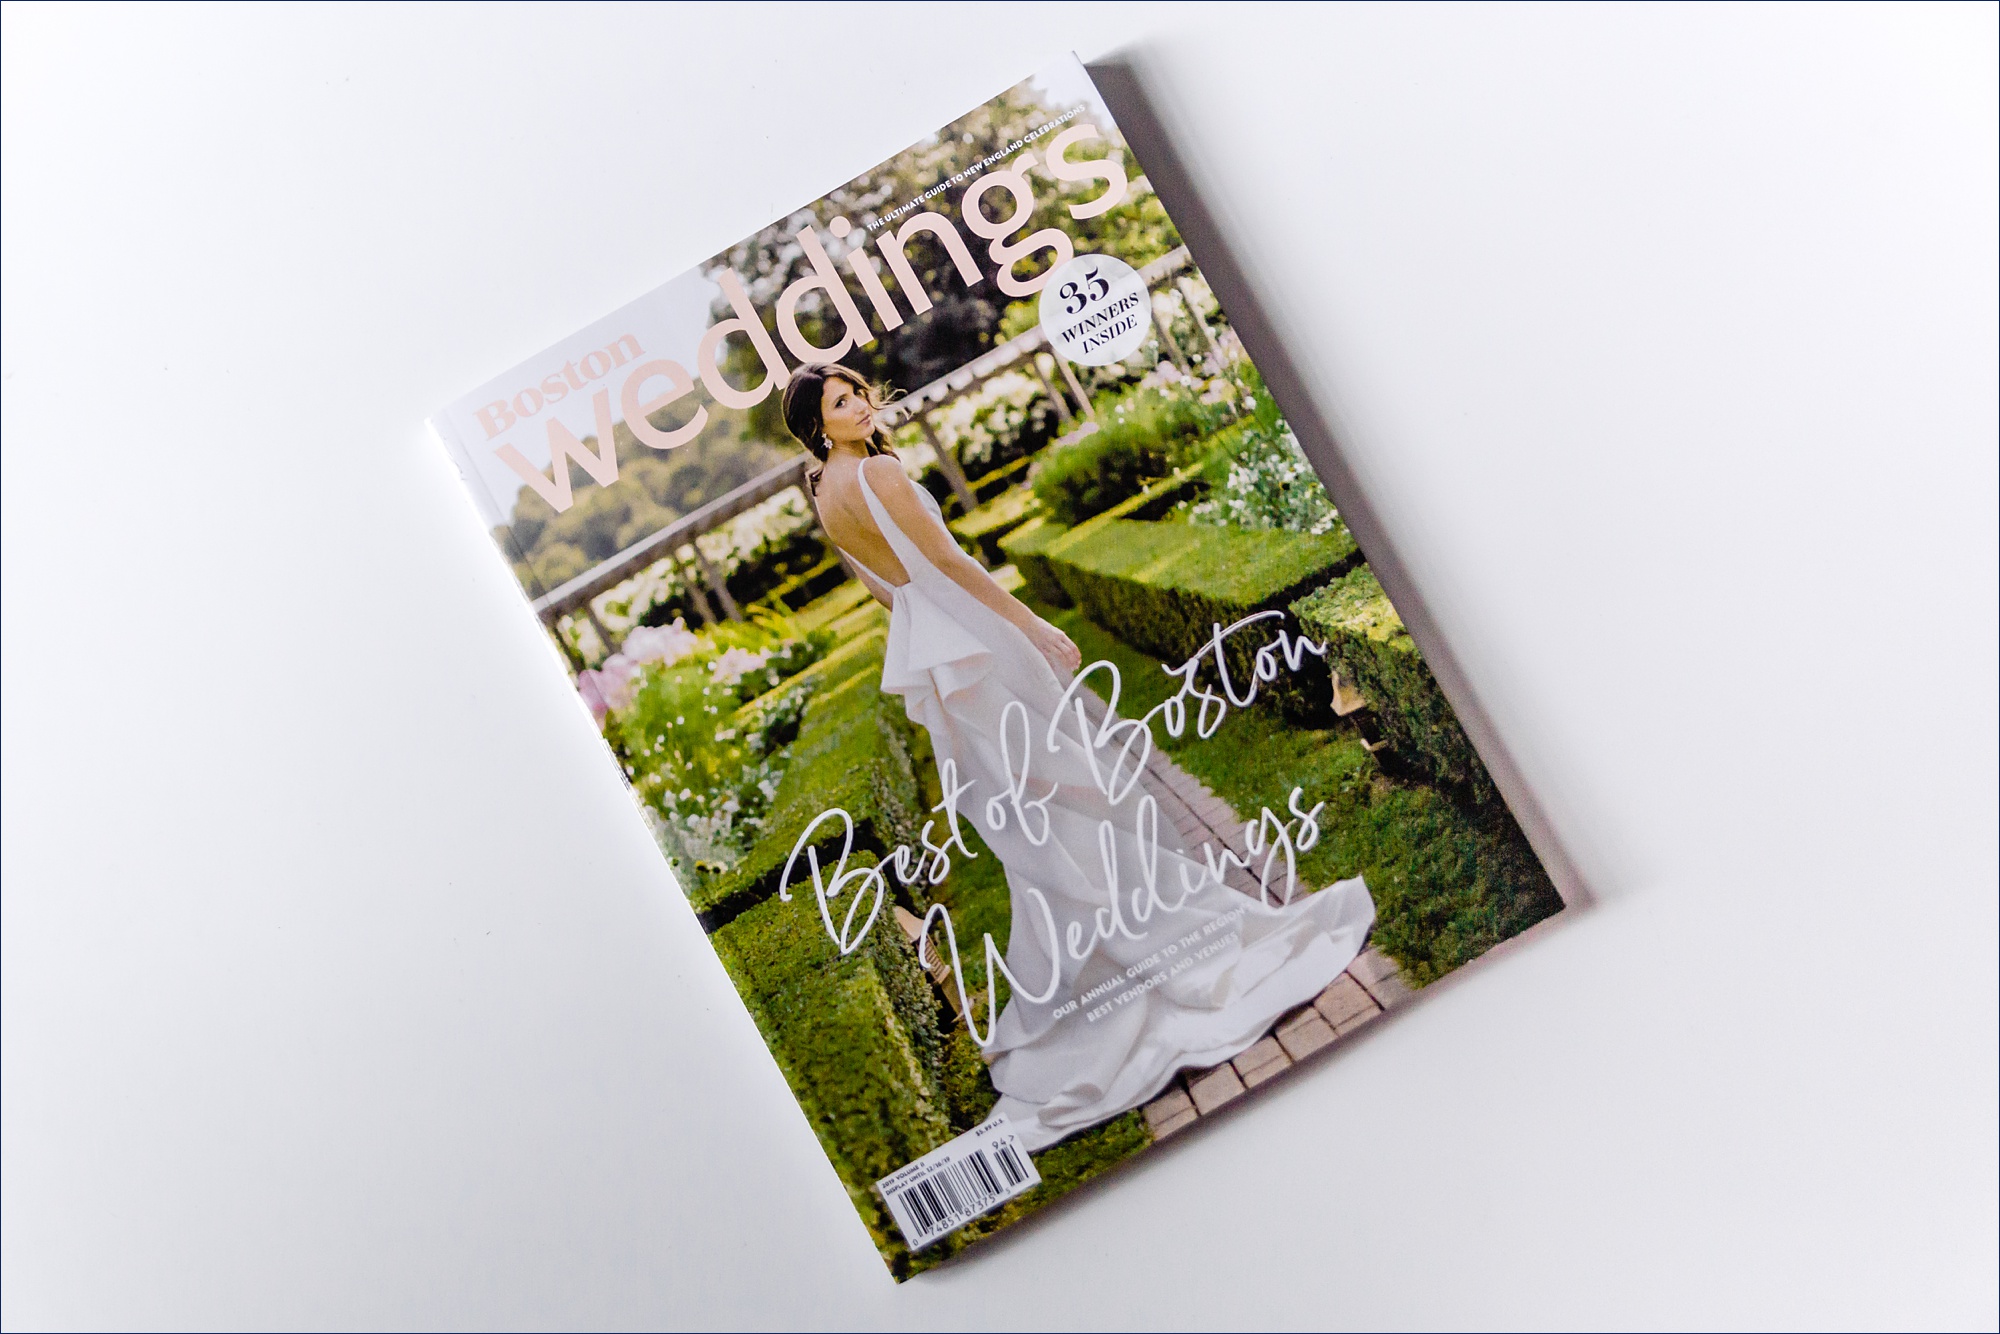 Primo Restaurant Wedding in Rockland Maine featured in Boston Weddings Magazine 2019